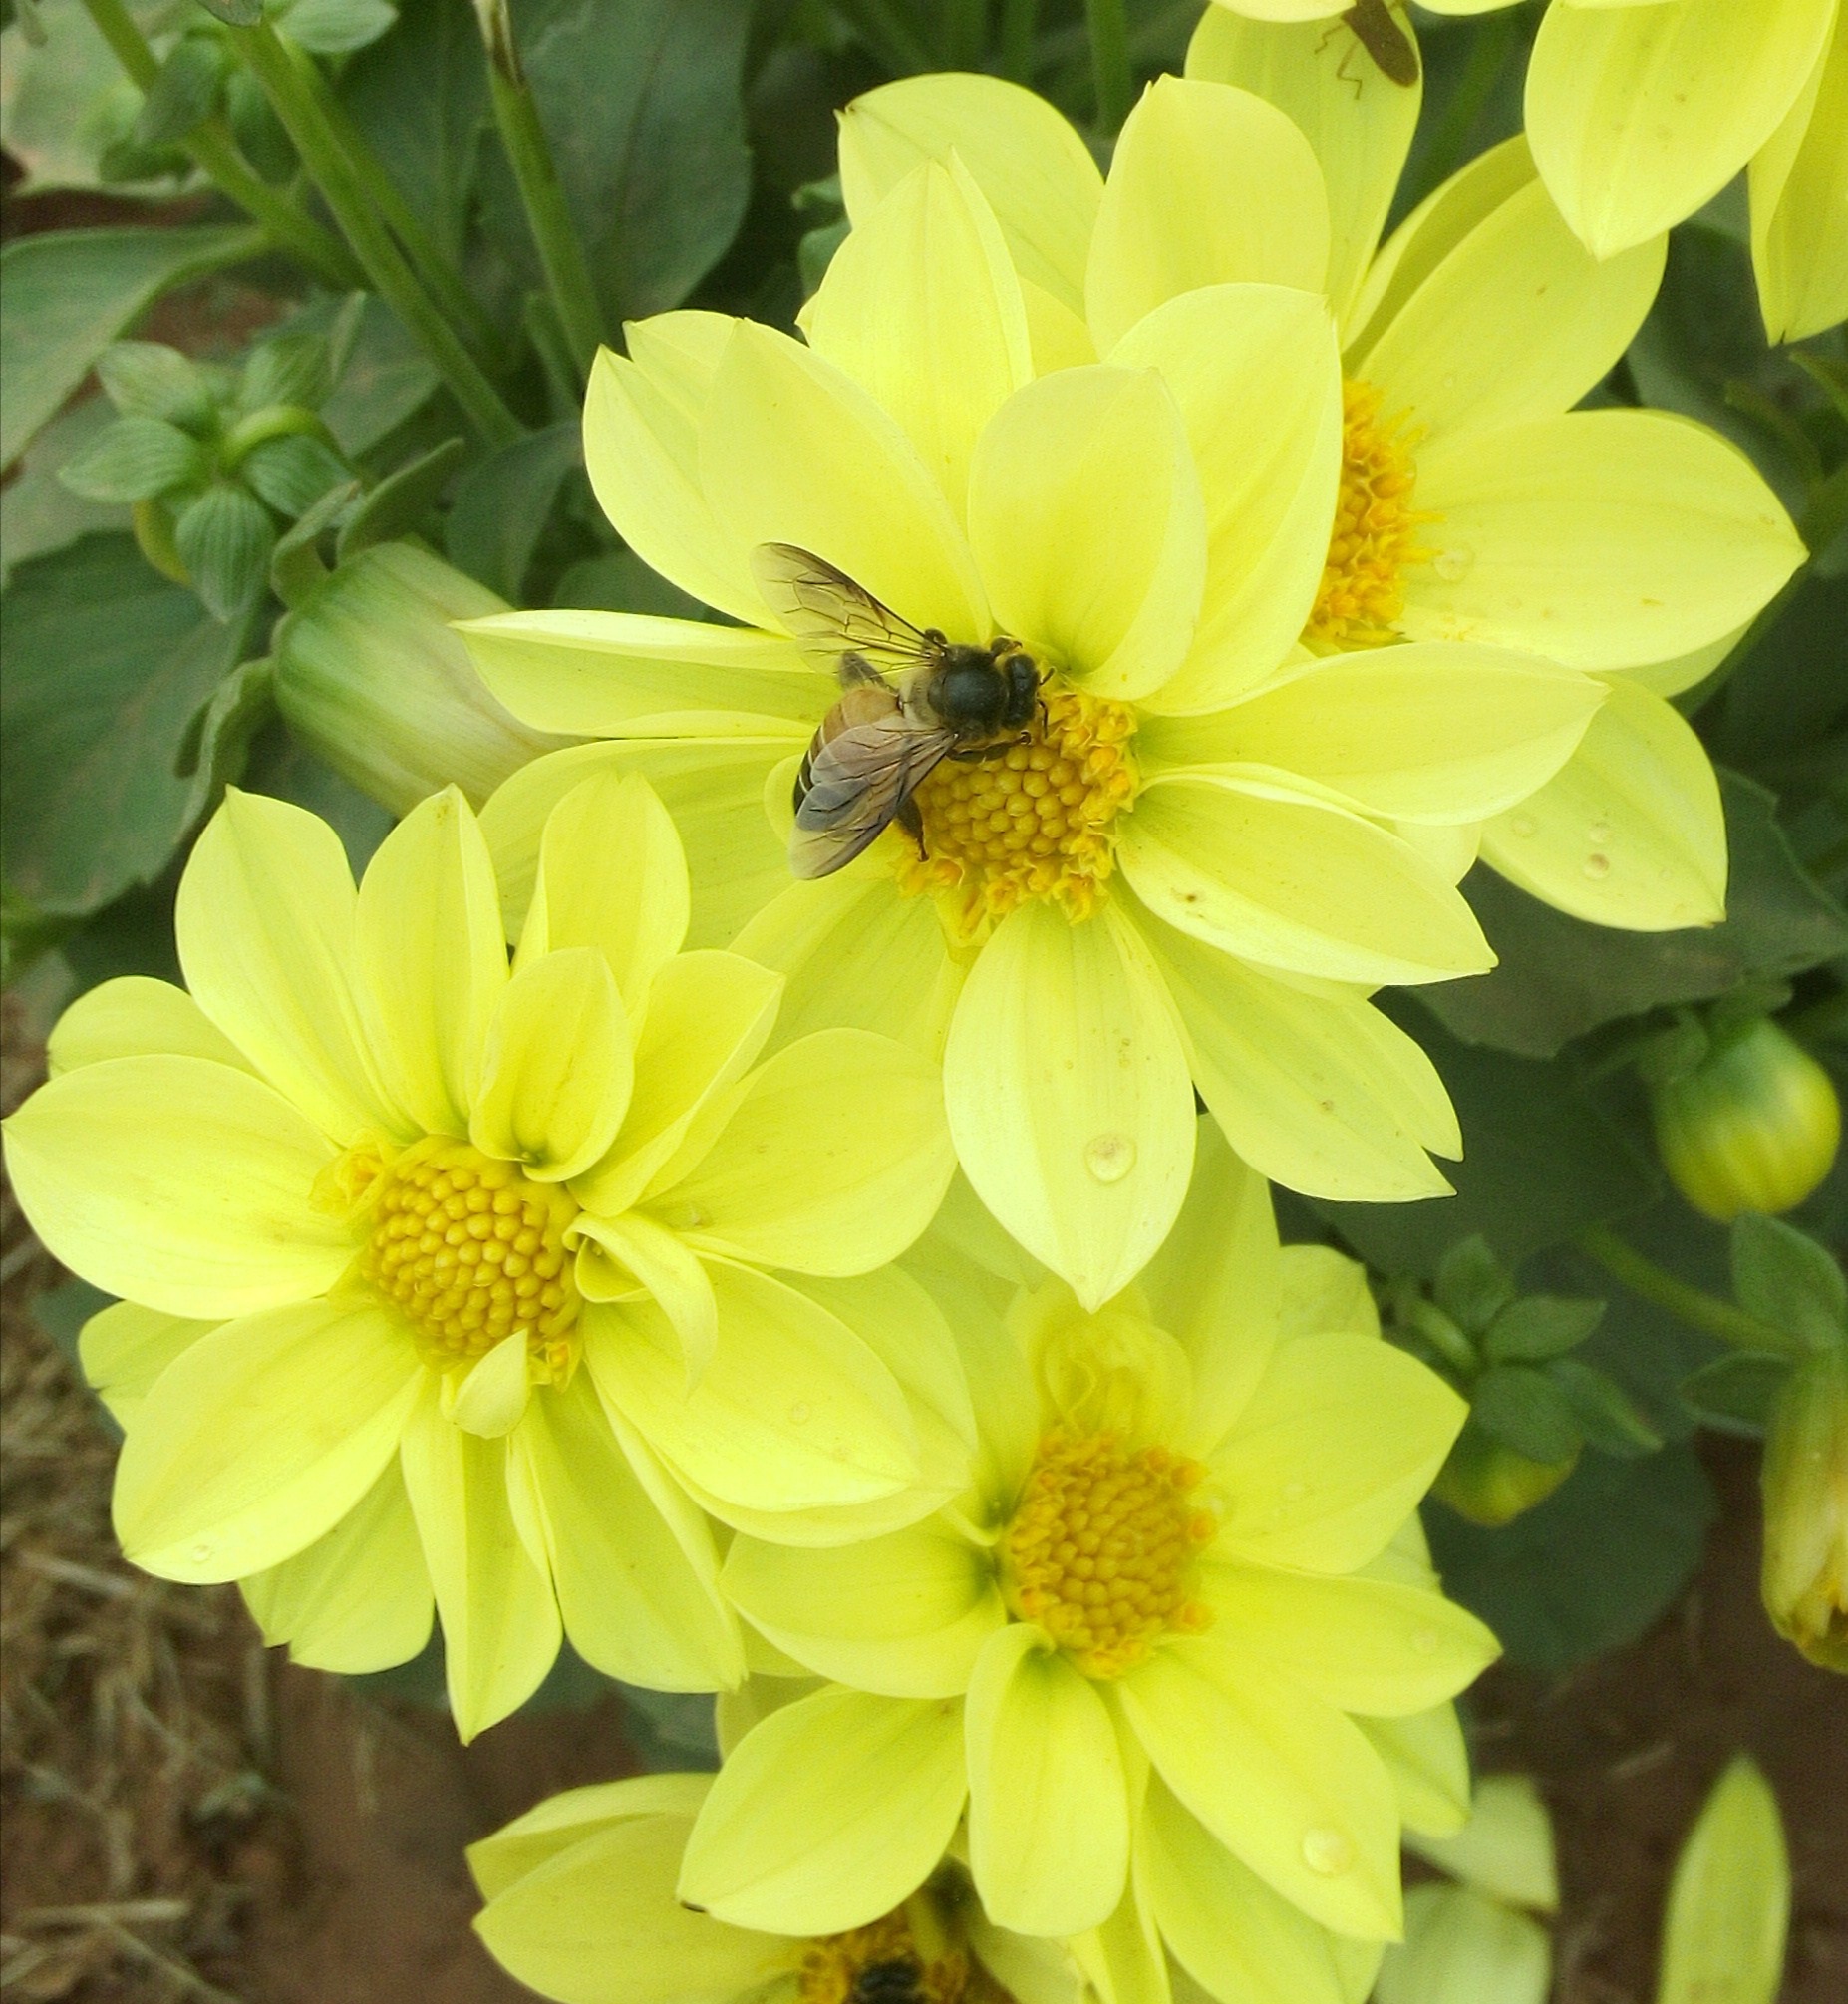 A honeybee on yellow flowers